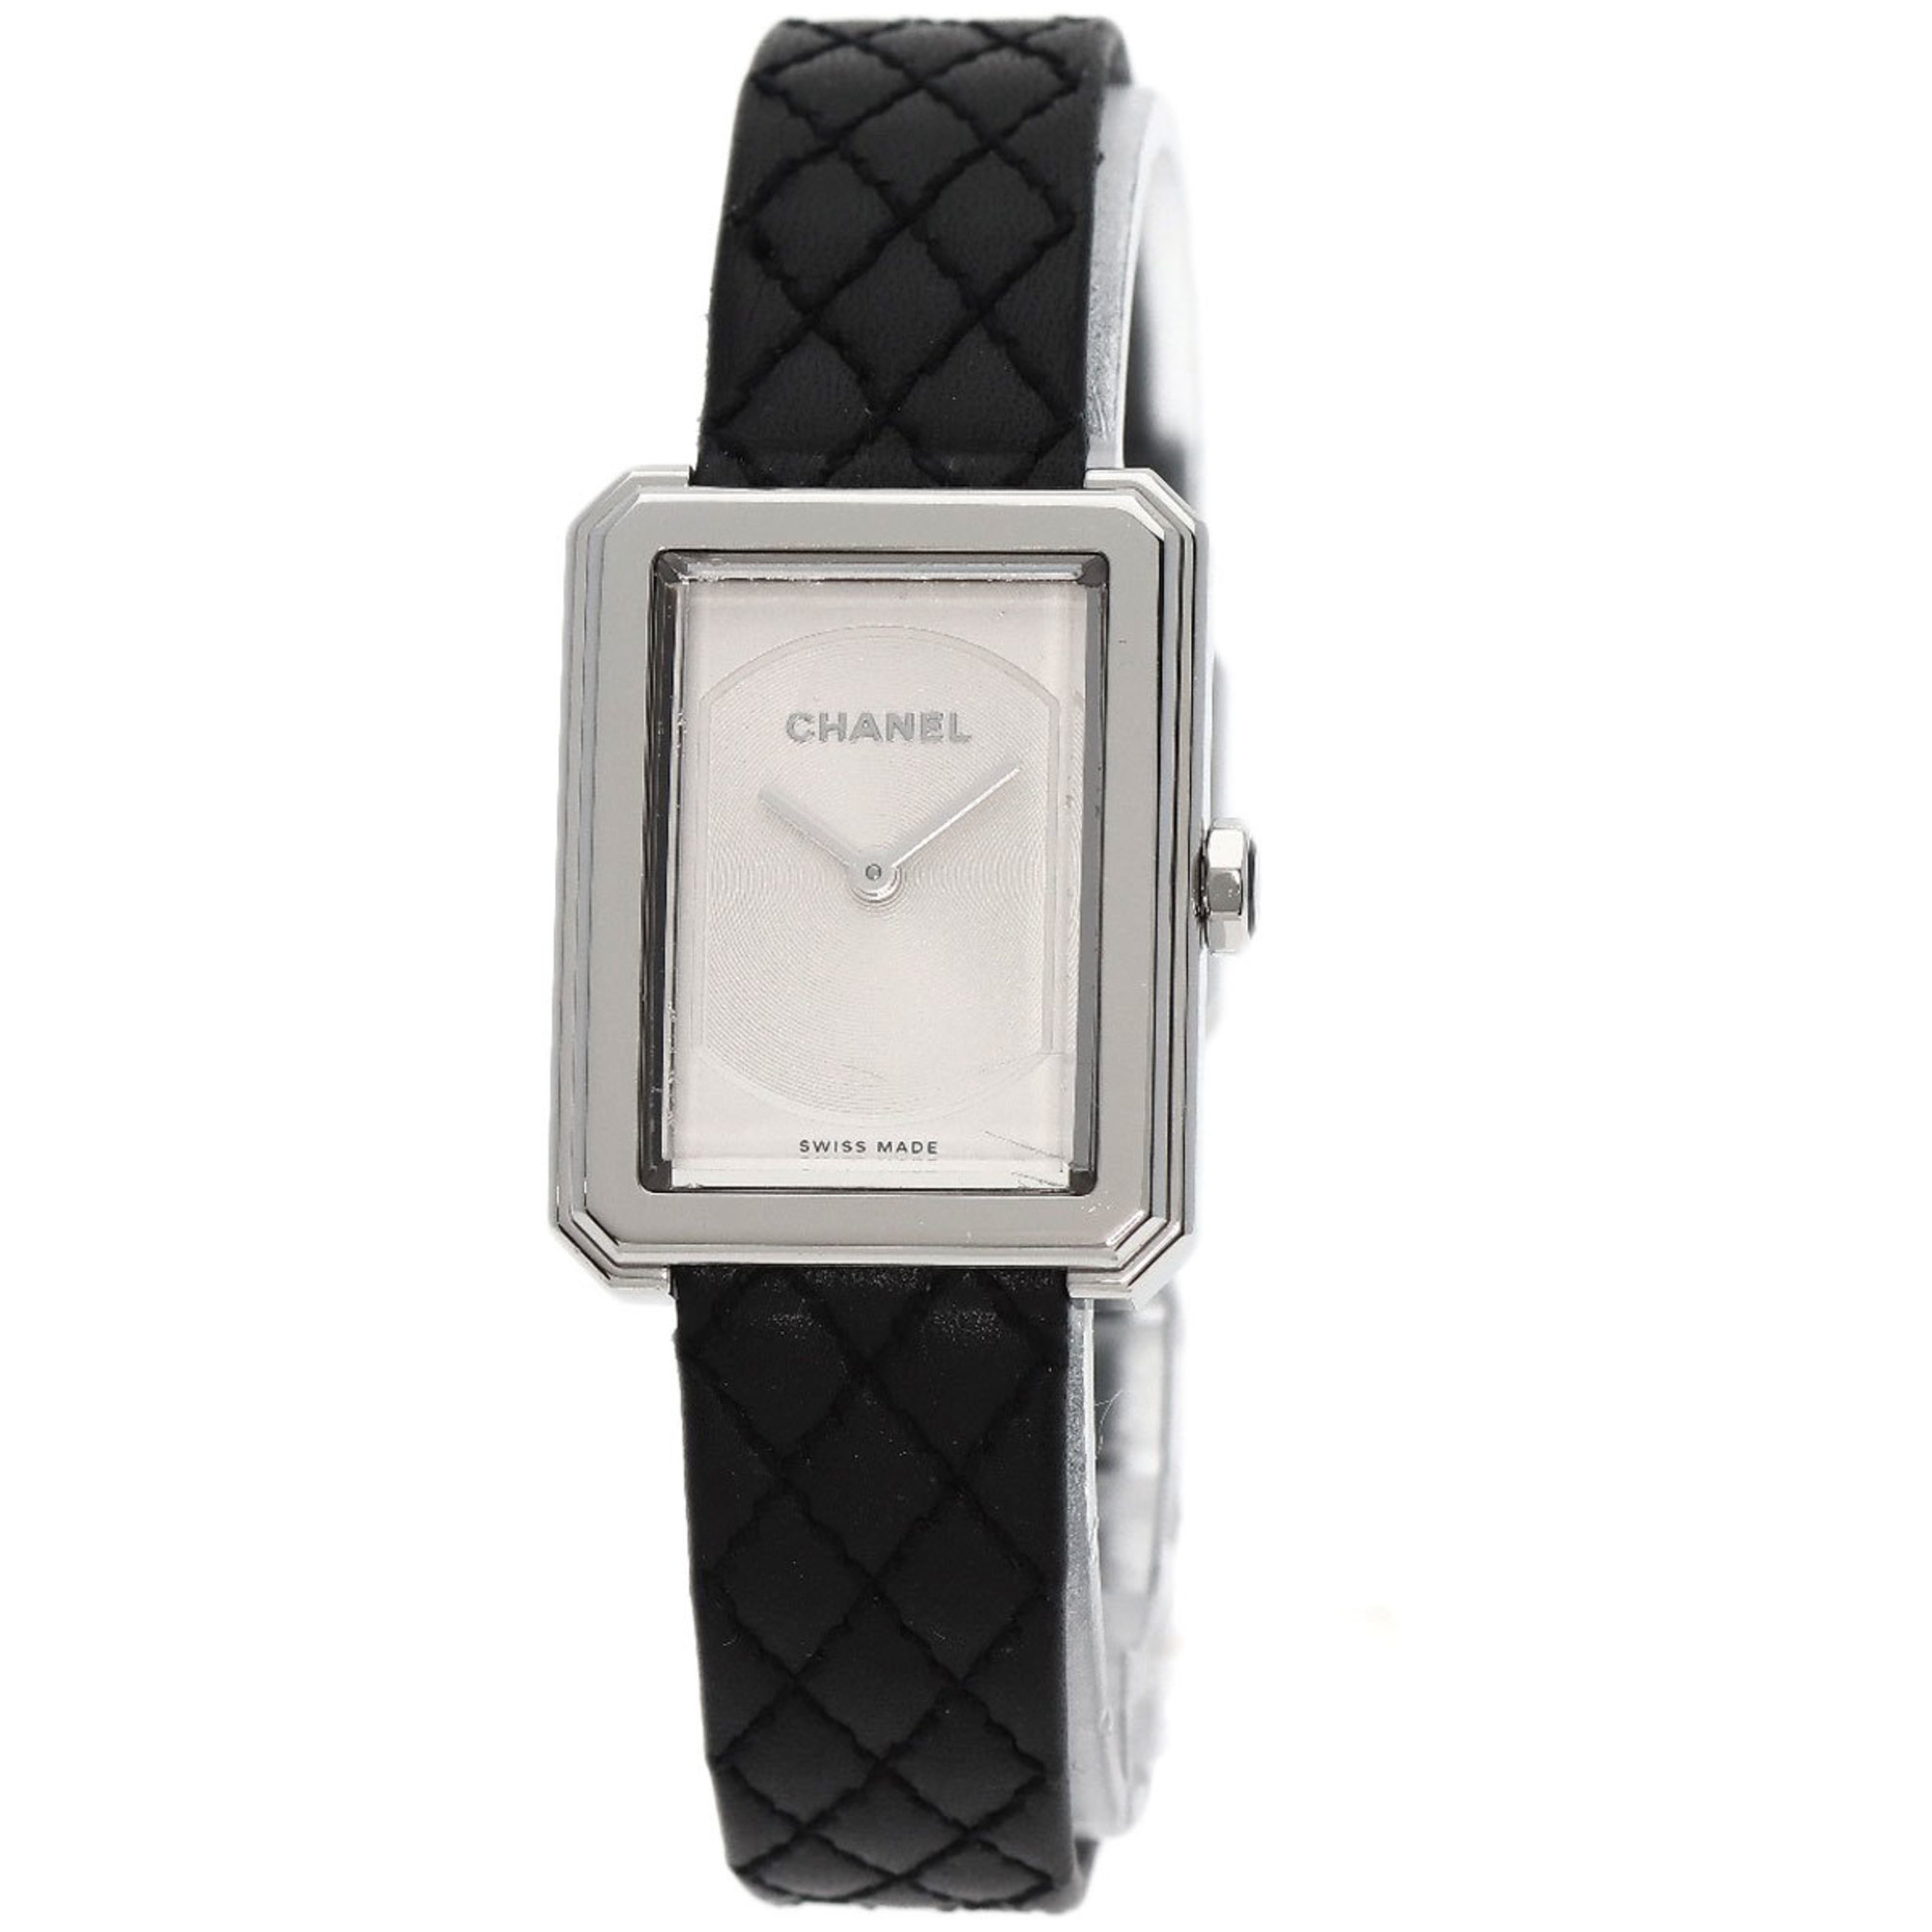 Chanel H6401 Boyfriend Small Model Watch Stainless Steel/Leather Women's CHANEL